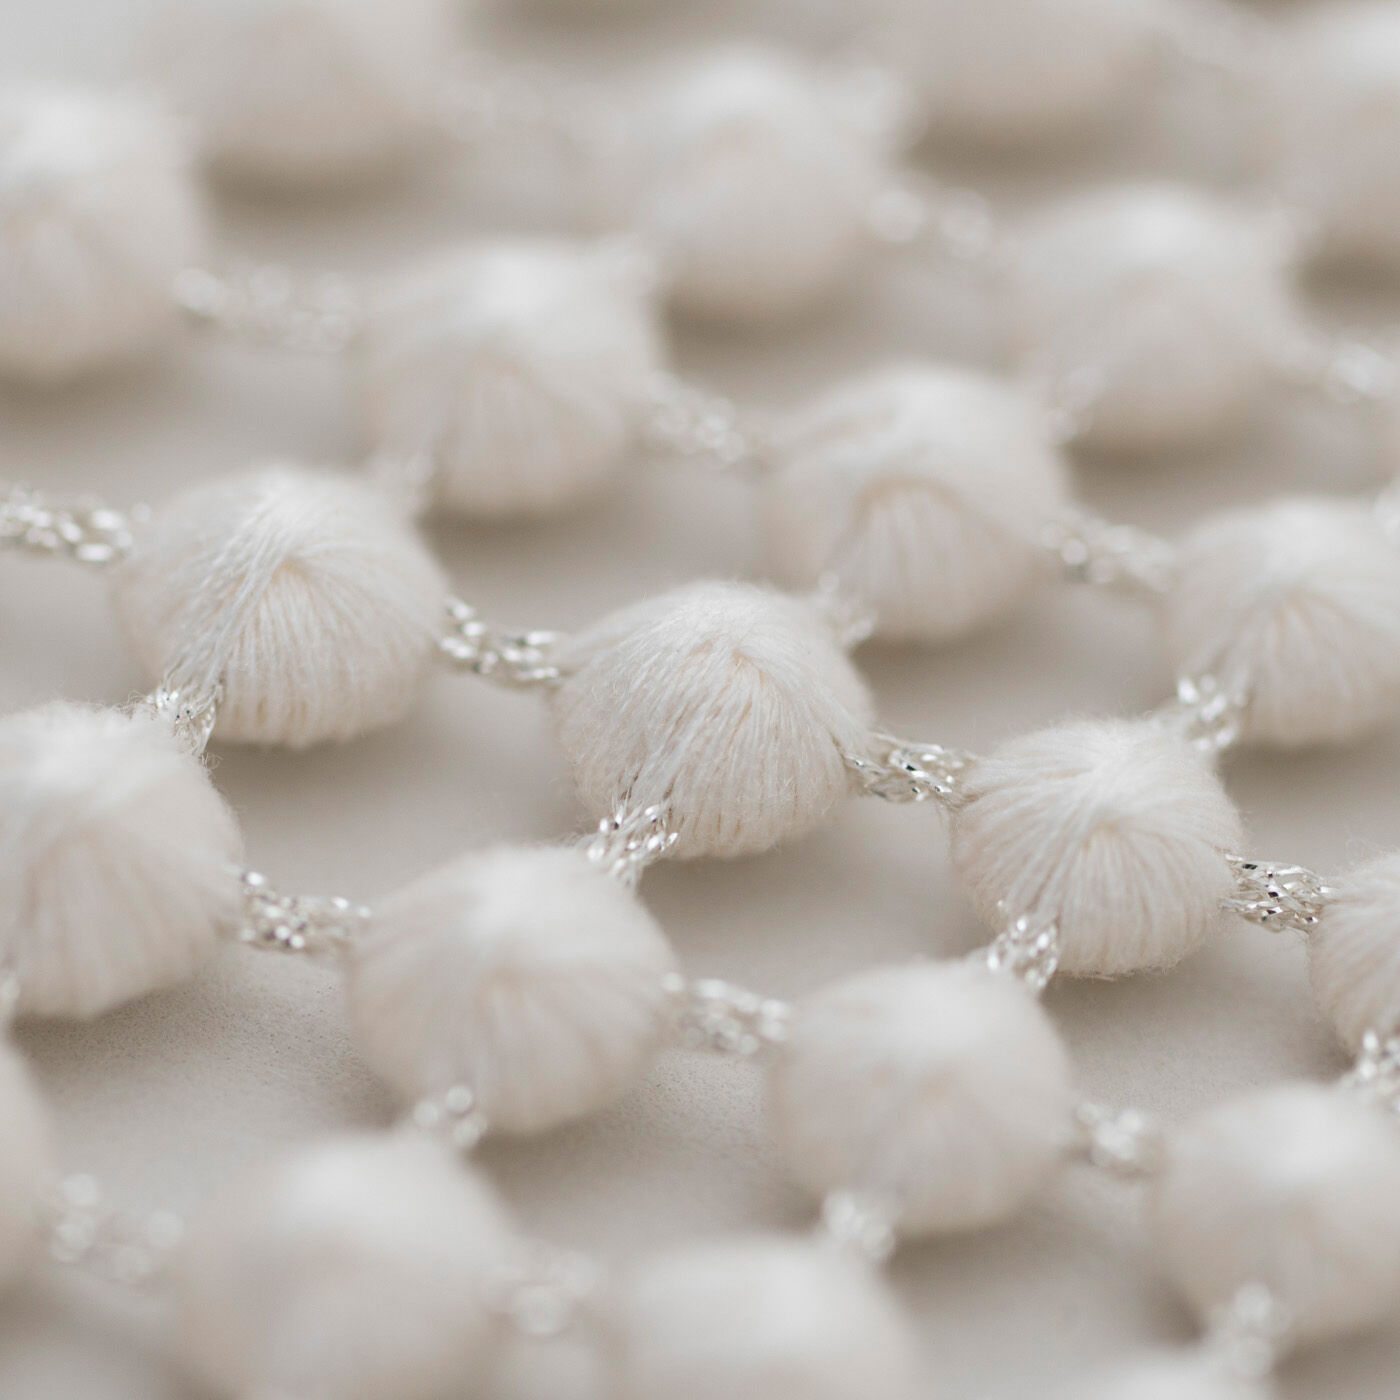 ＆Stories|群馬の刺繍工房が作った 糸の宝石の衿飾りネックレス〈アイボリー×シルバー〉|職人技と最先端の技術から生まれた球体刺繍は、宝石のような美しさ。繋ぎ部分には、銀色のラメ糸を使用しています。